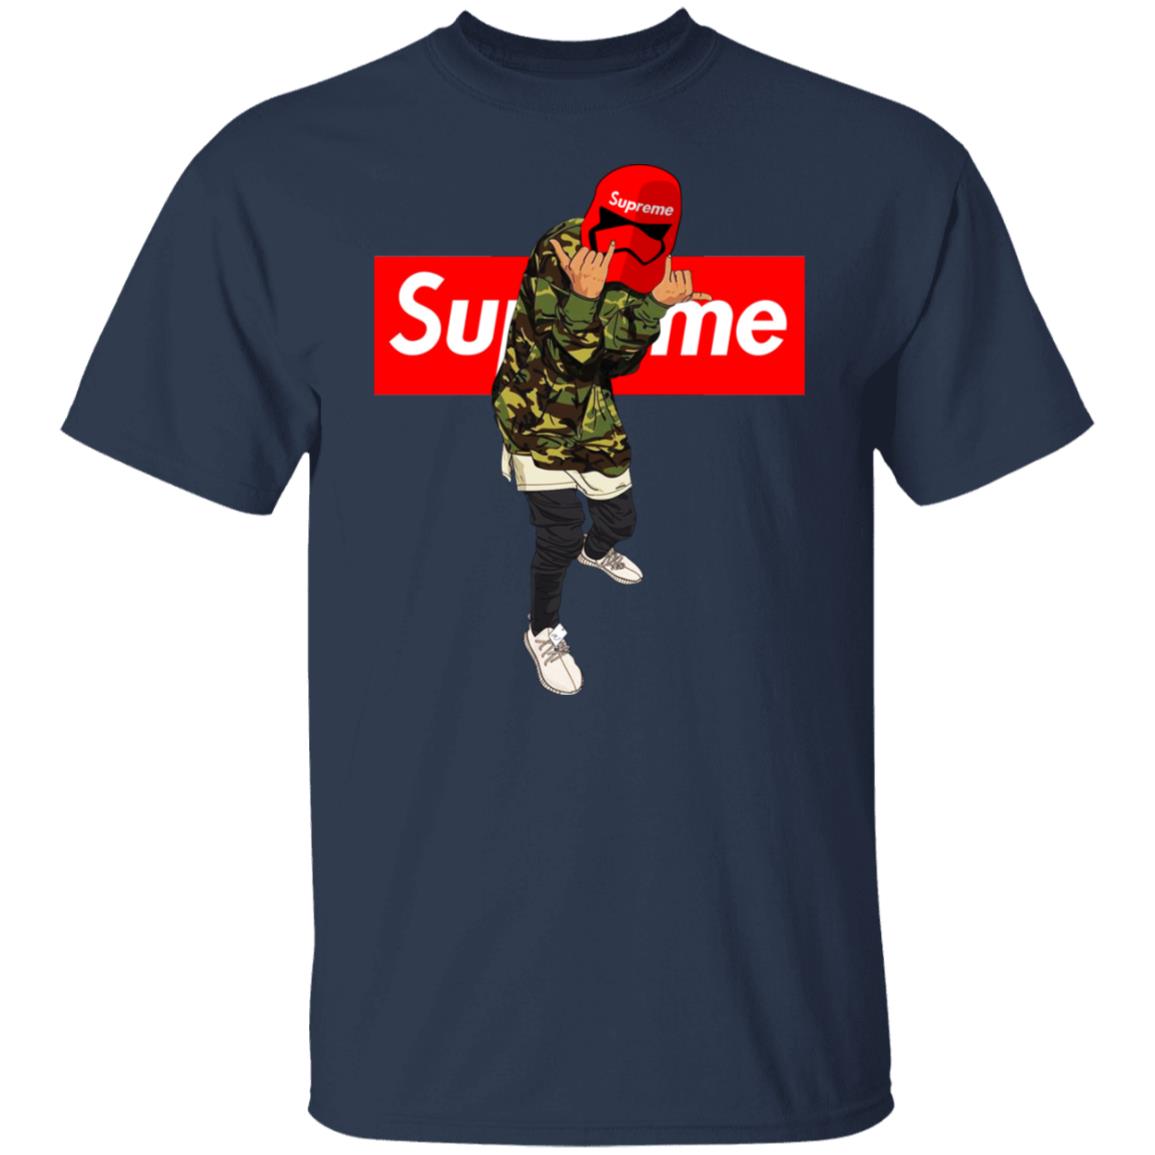 Supreme' Unisex Long Sleeve Hoodie Shirt